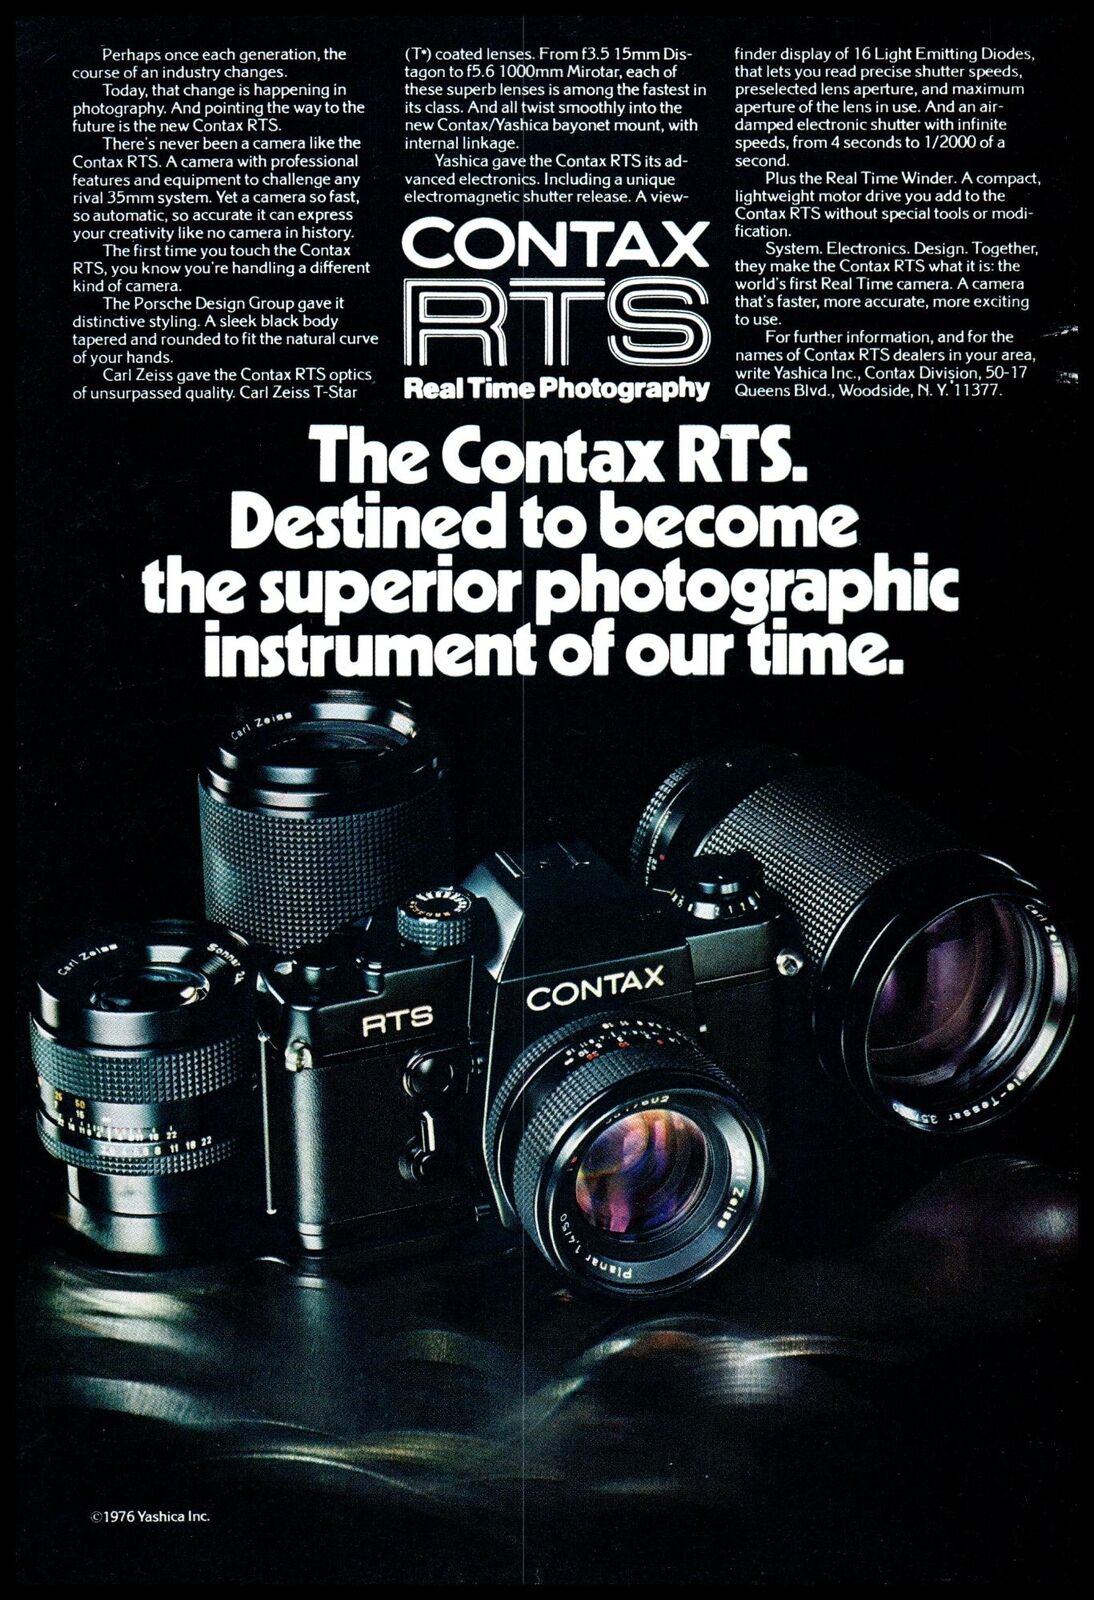 1976 Contax RTS SLR Camera Vintage Print At Film Photography Wall Art Decor